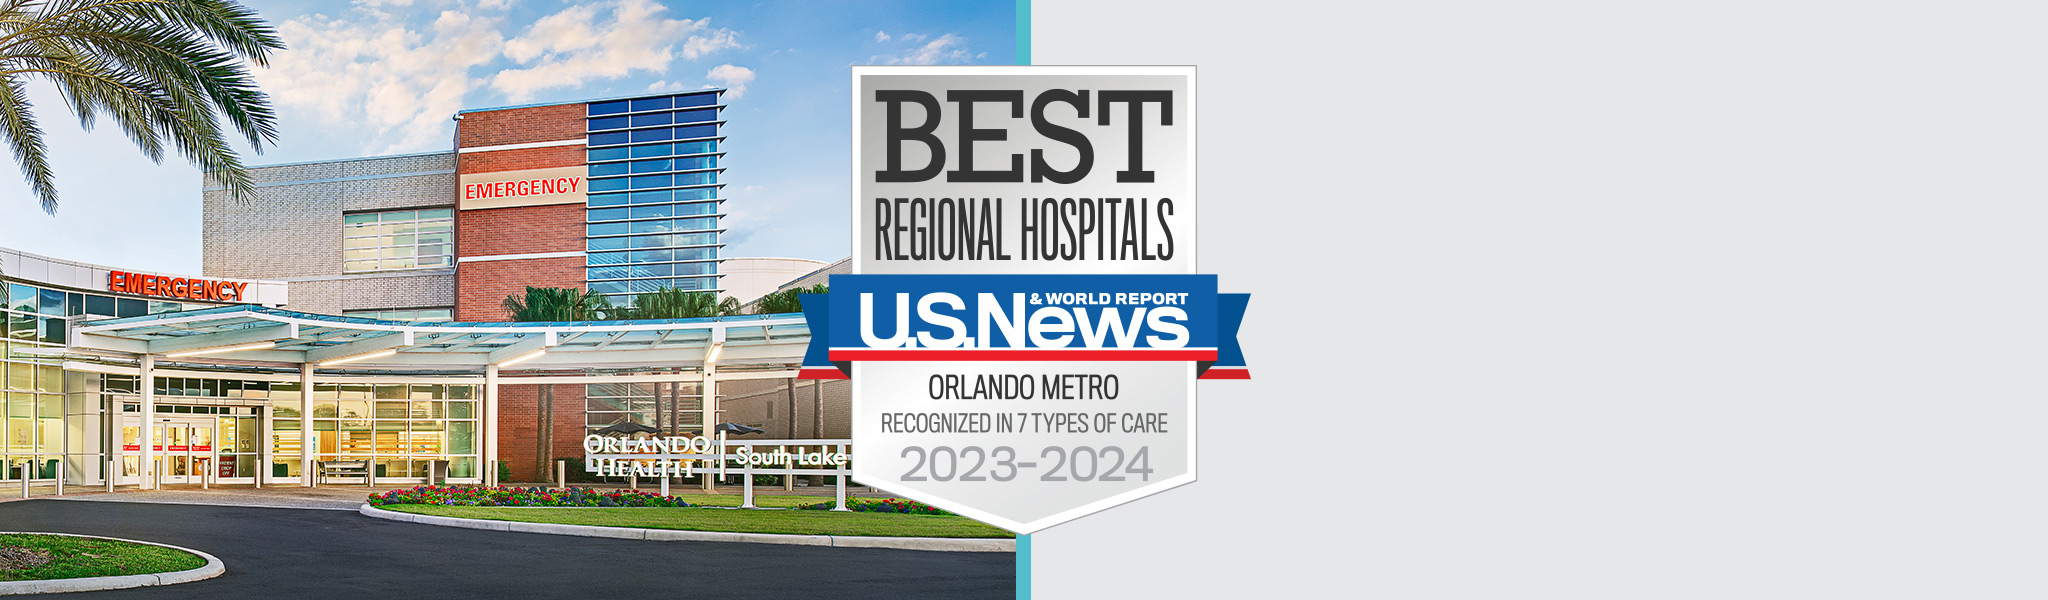 Best Regional Hospitals - U.S. News - Orlando Metro Recognized in 7 types types of care 2023-2024